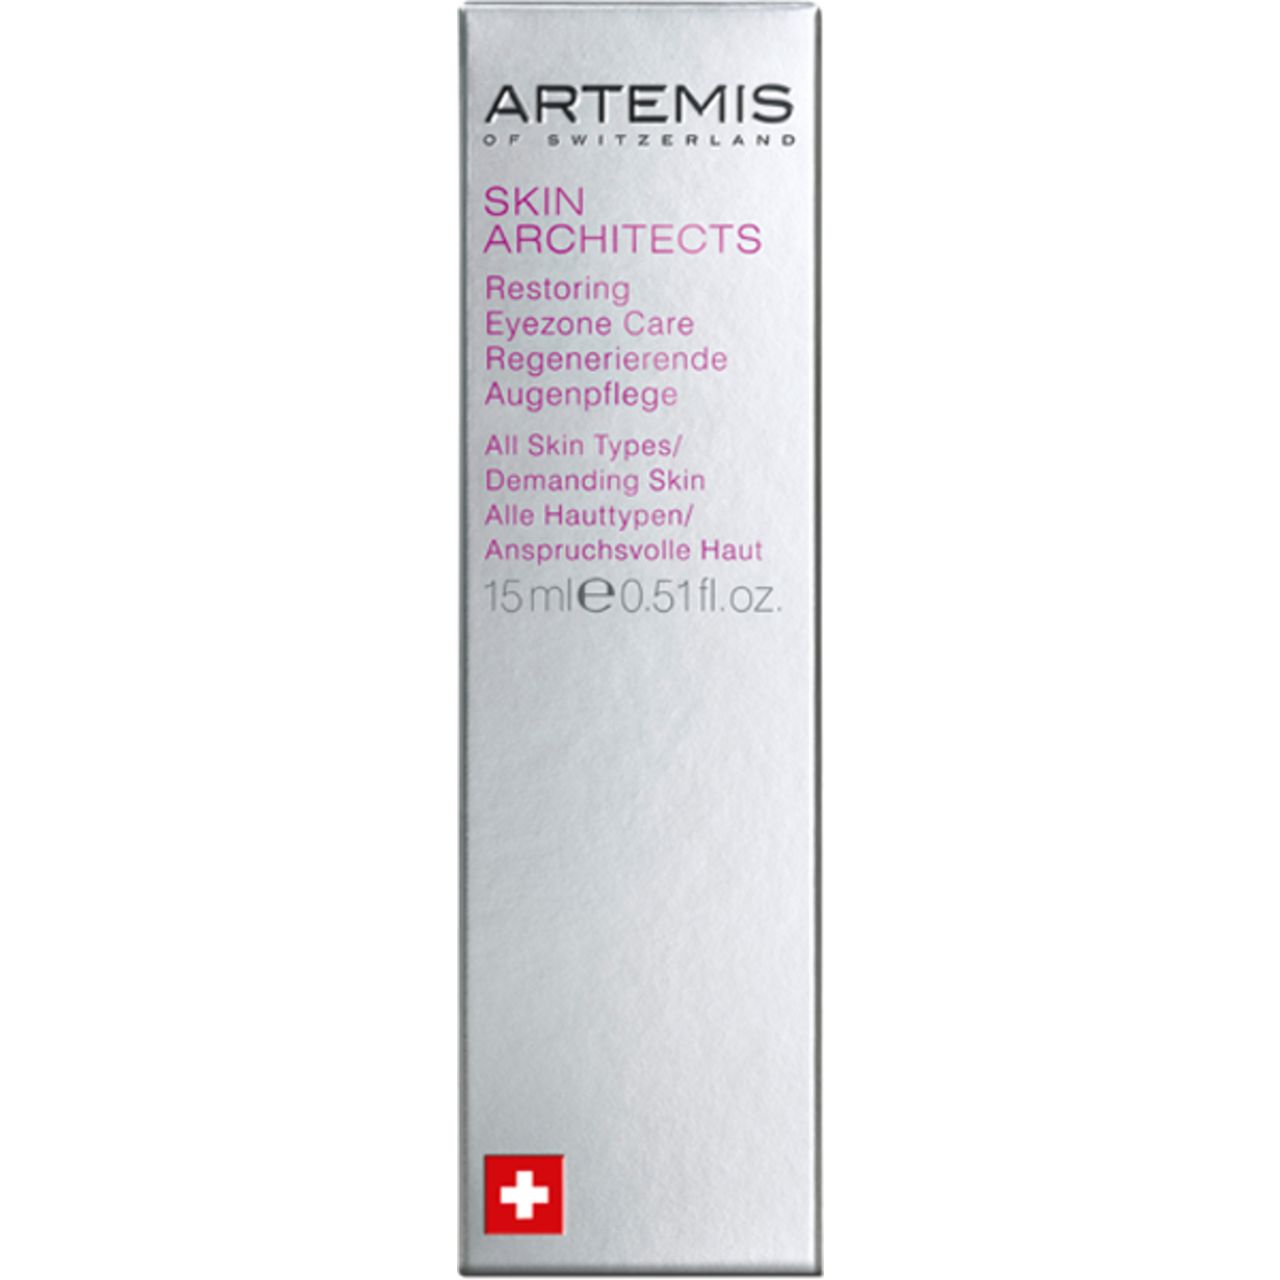 Artemis of Switzerland Skin Architects Restoring Eye Zone Care